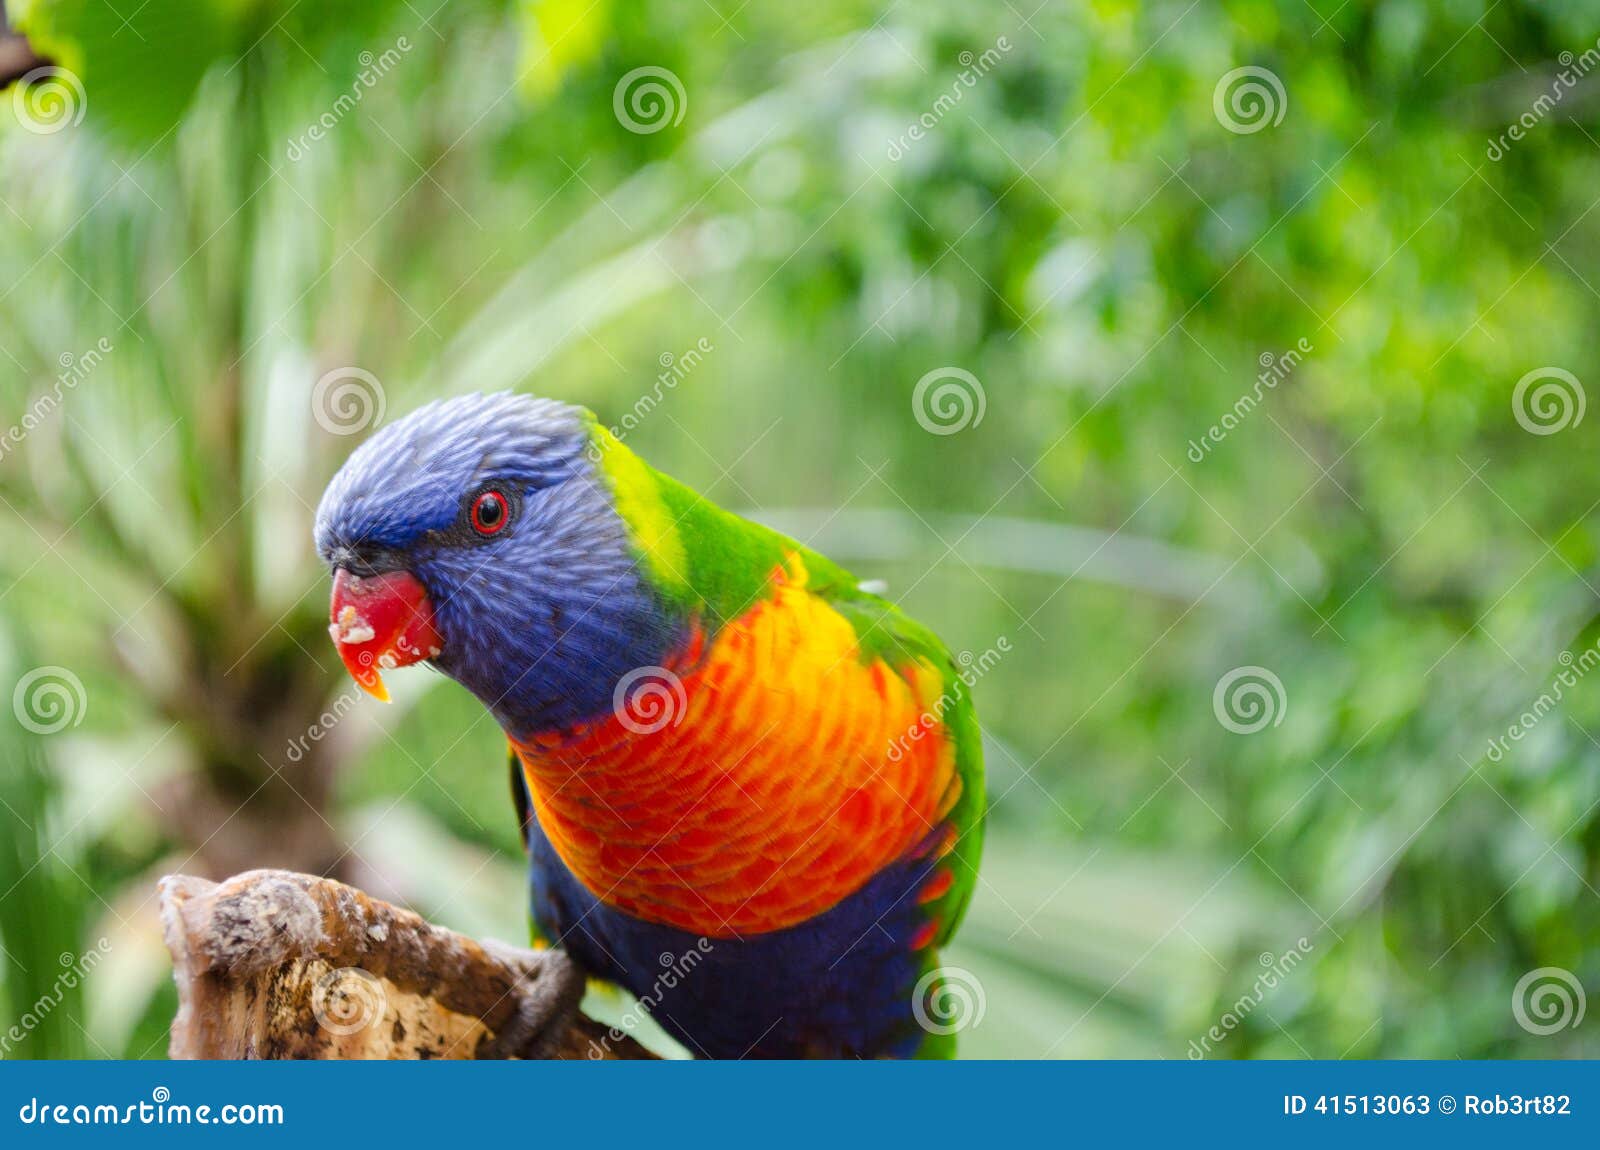 parrot in loro park tenerife(spain)